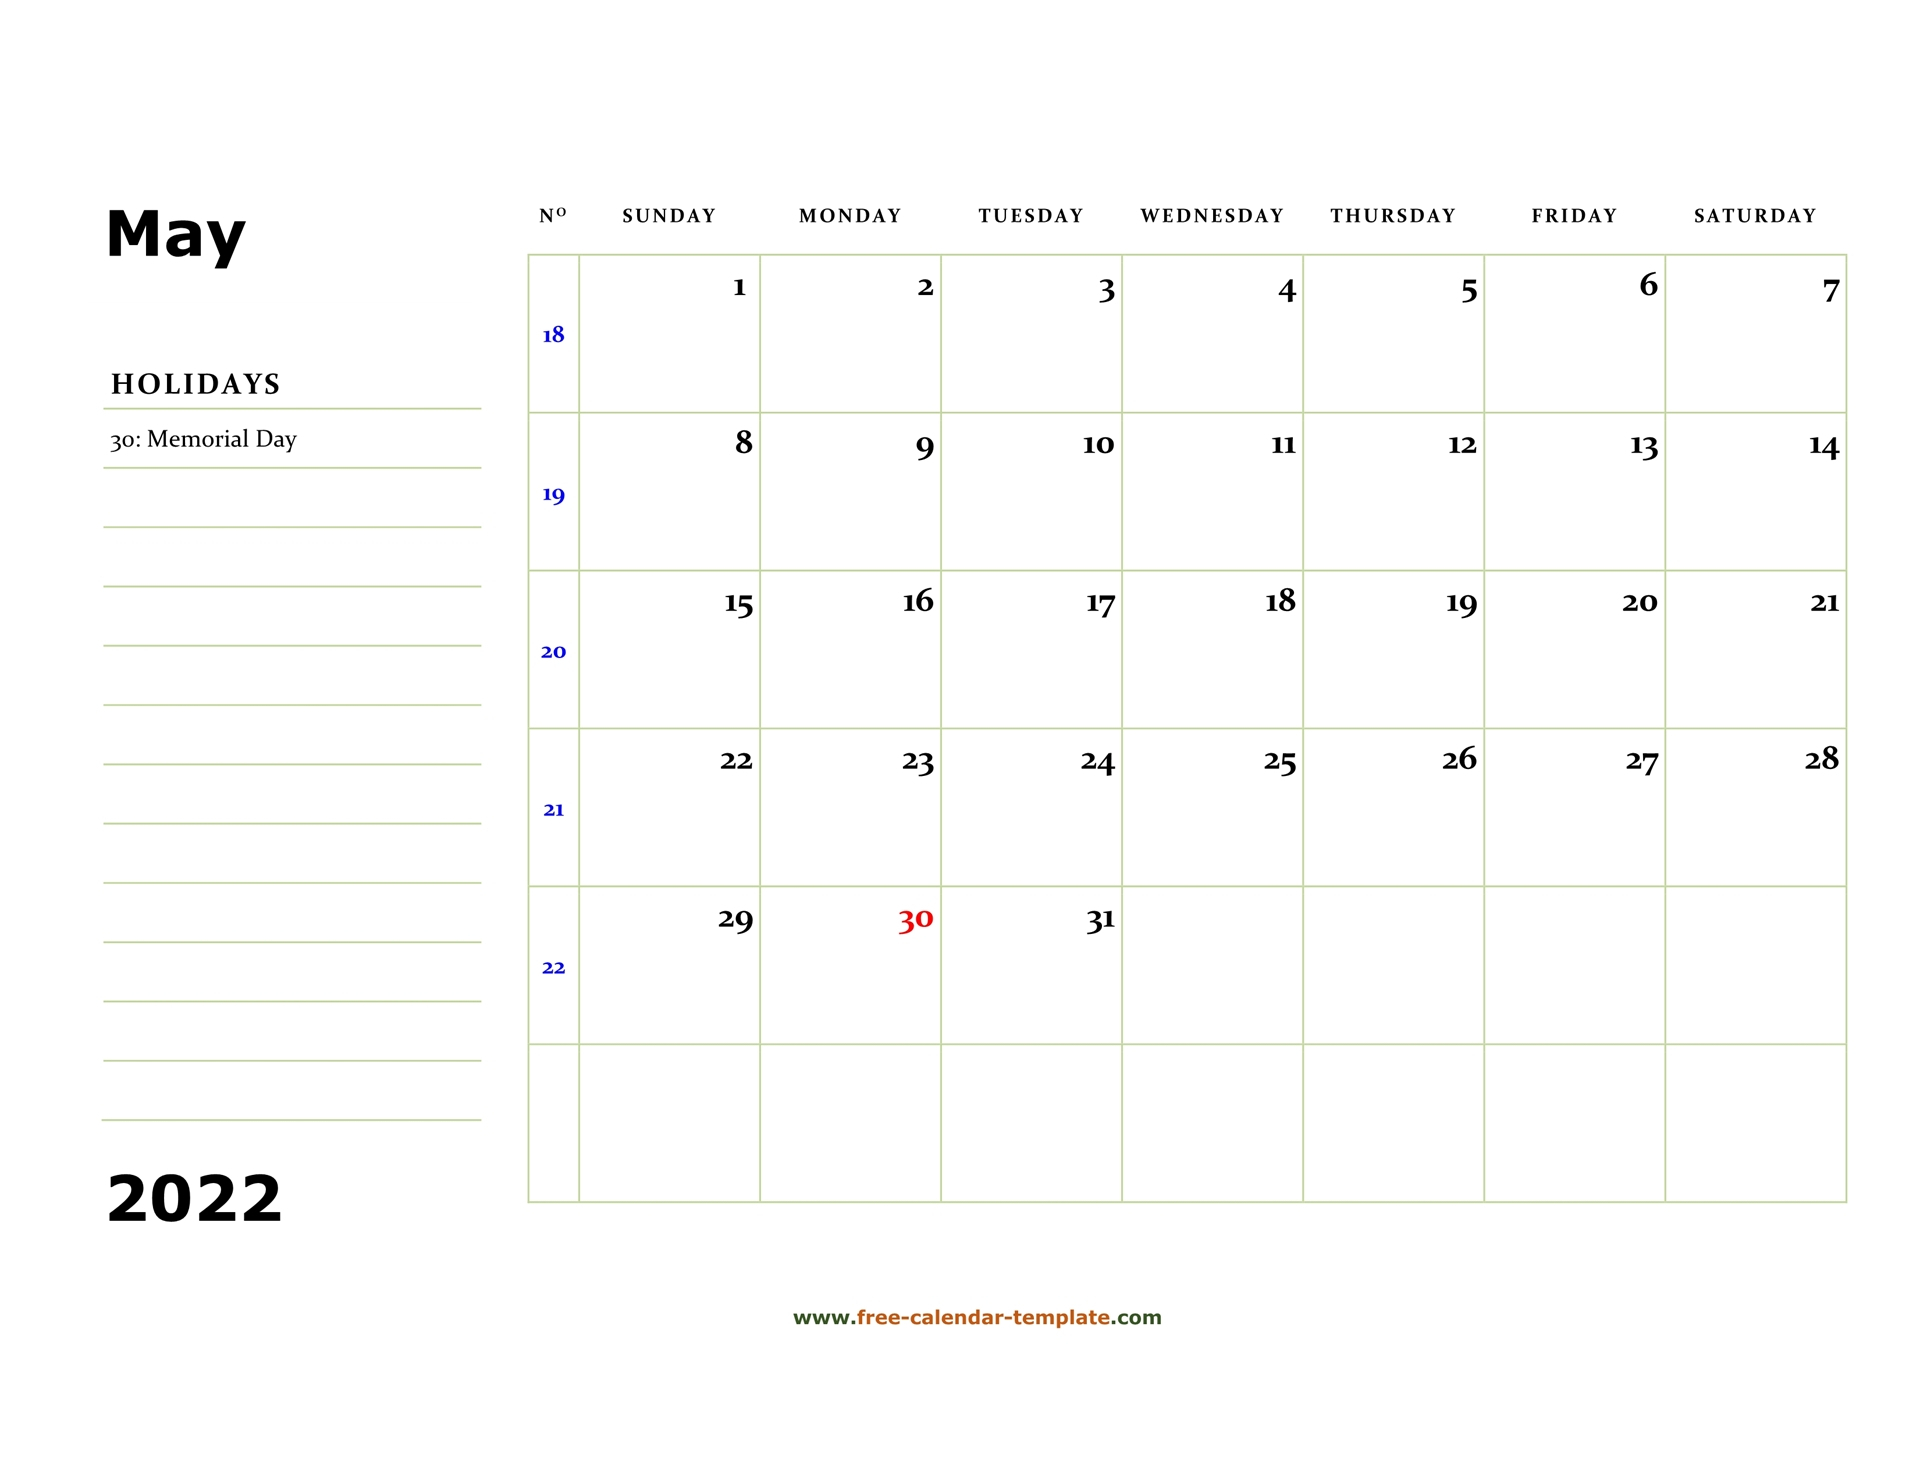 May 2022 Free Calendar Tempplate | Free-Calendar-Template